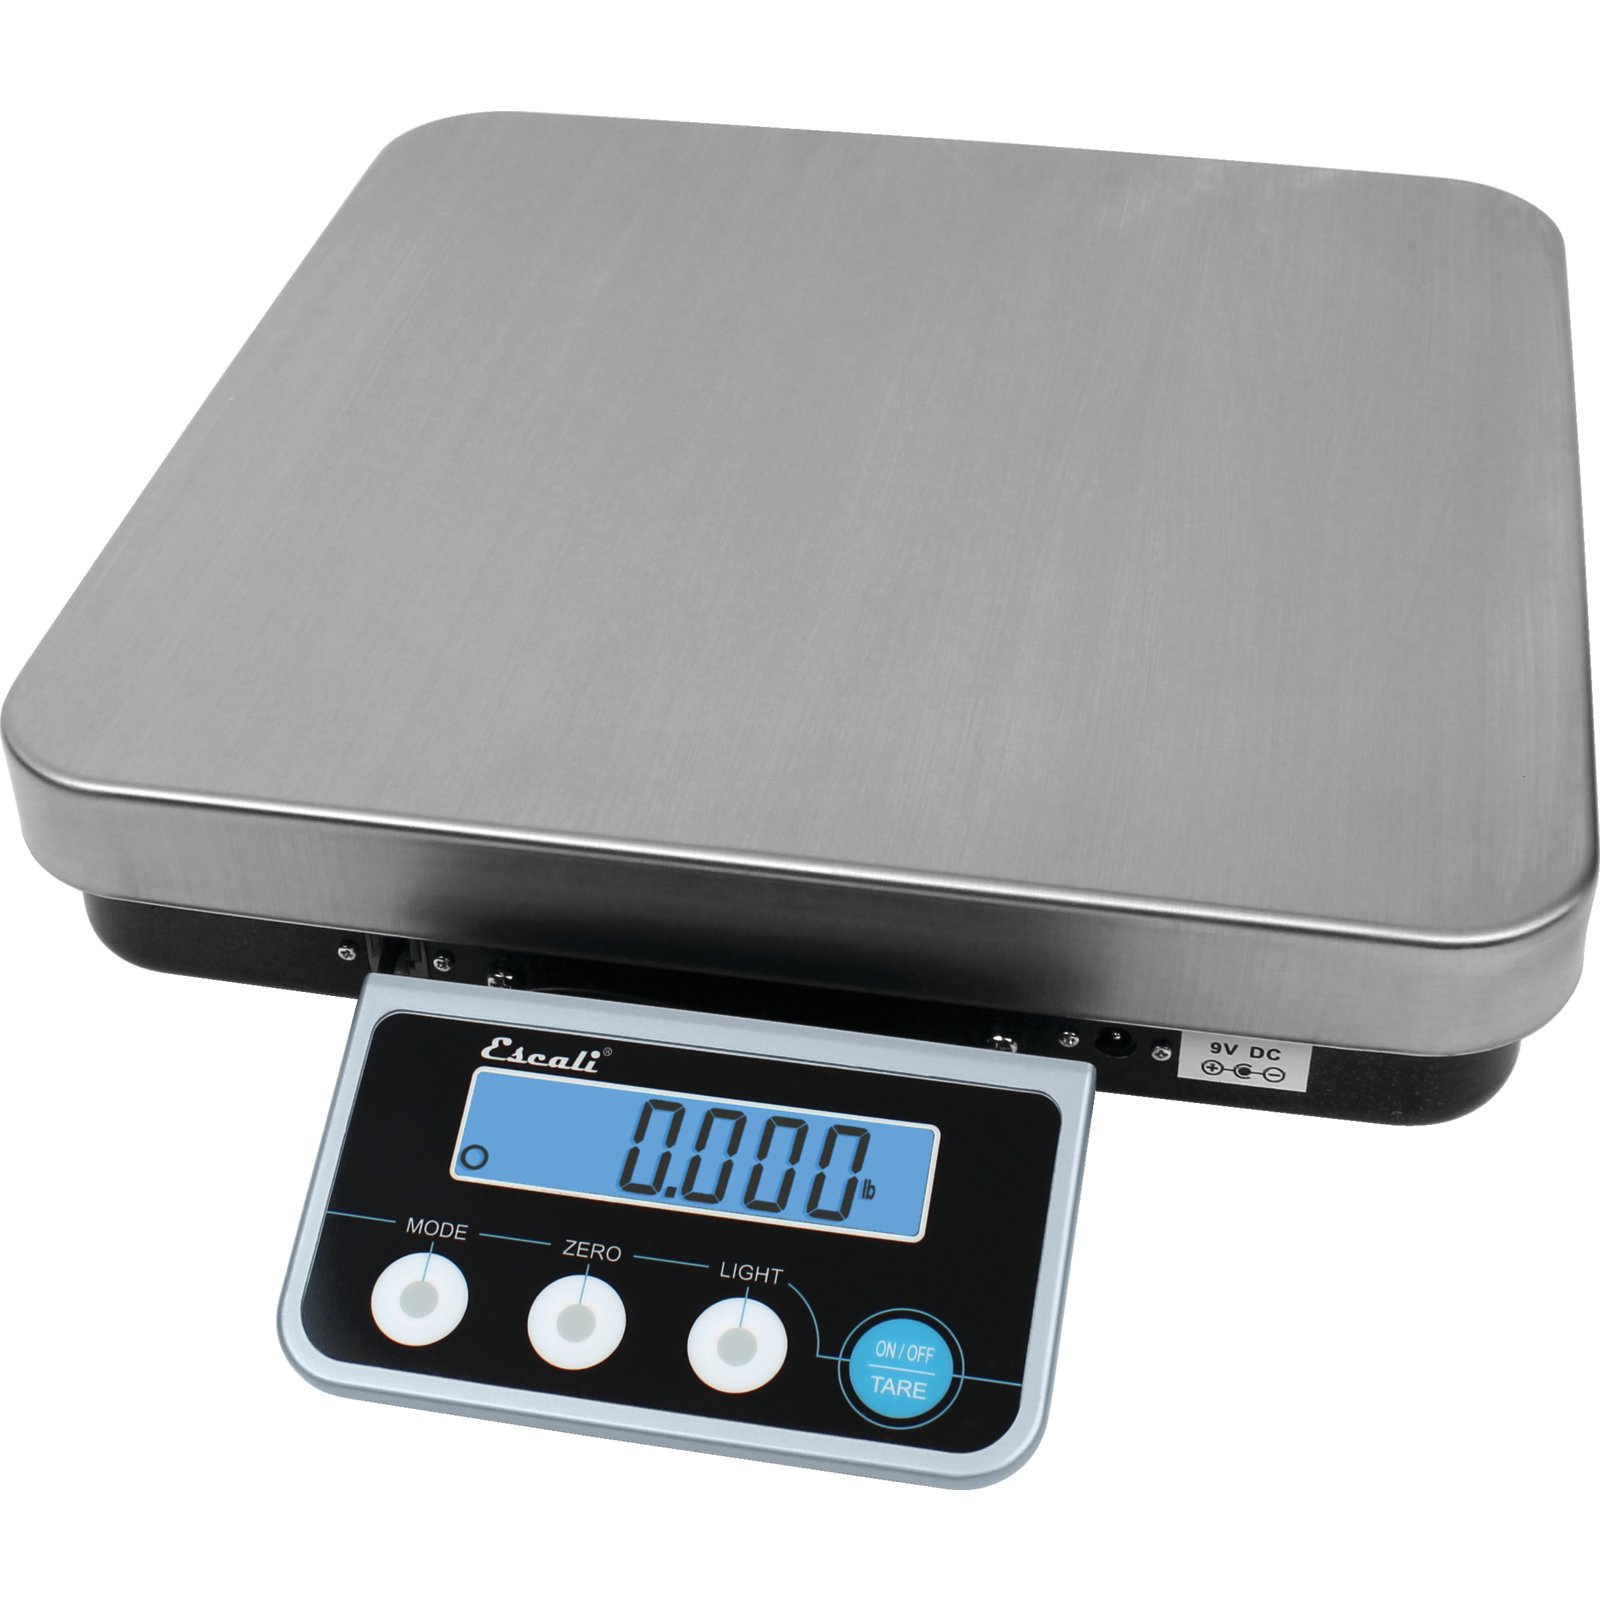 Купить весы бытовые электронные. Весы электронные Daiwa Digital Scale 25 Gray. Весы бытовые. Бытовые весы для детей. Весы Kitchen Scale.